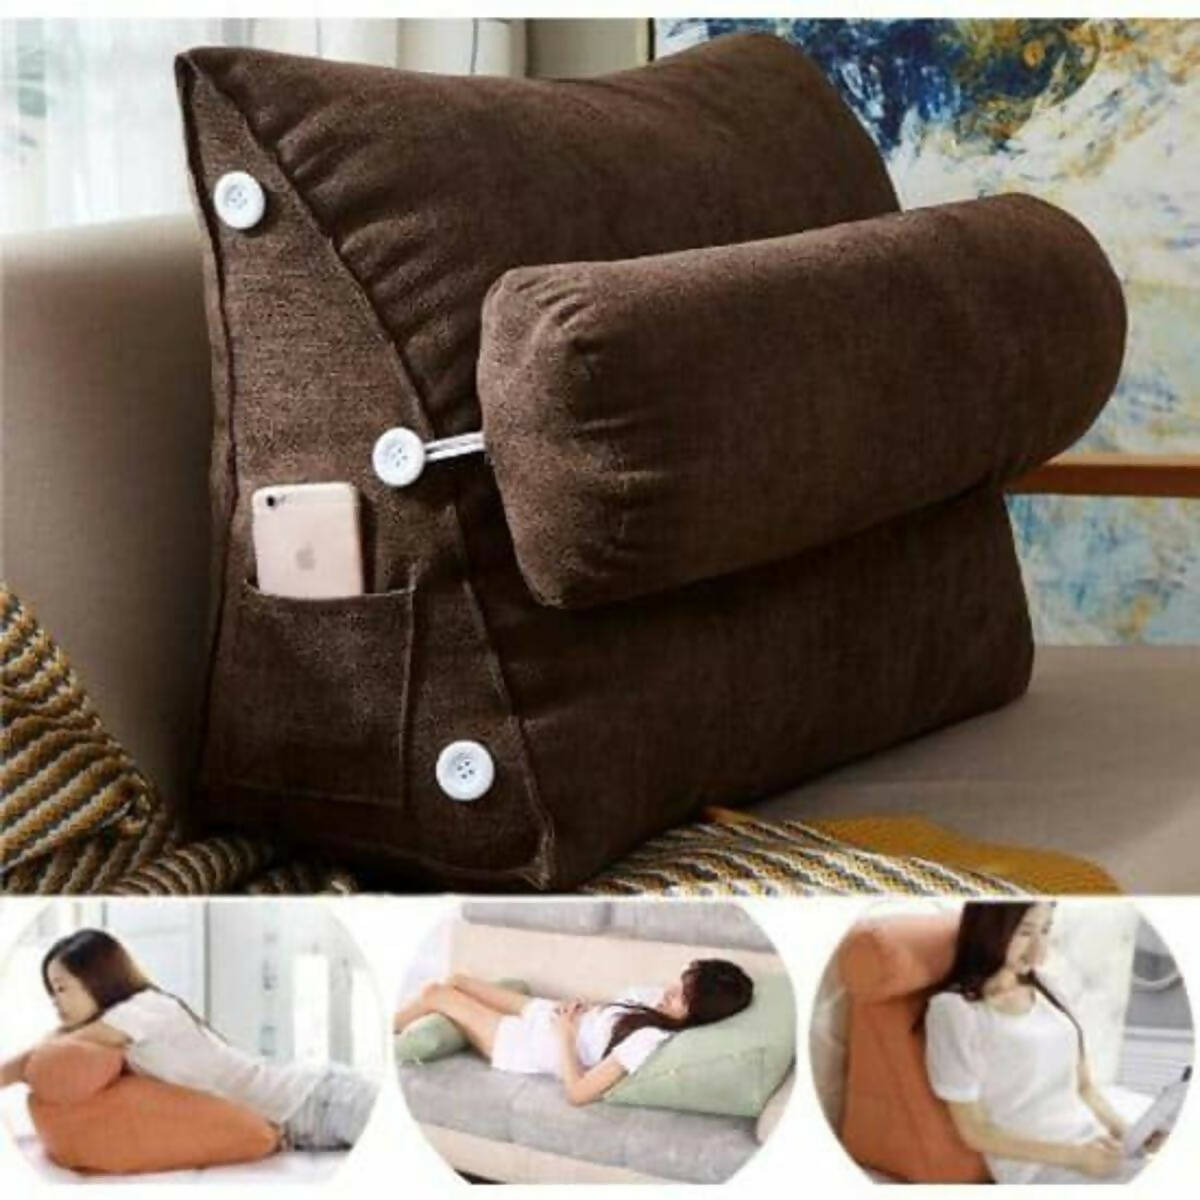 Triangular Back Support Cushion / Pillow 002